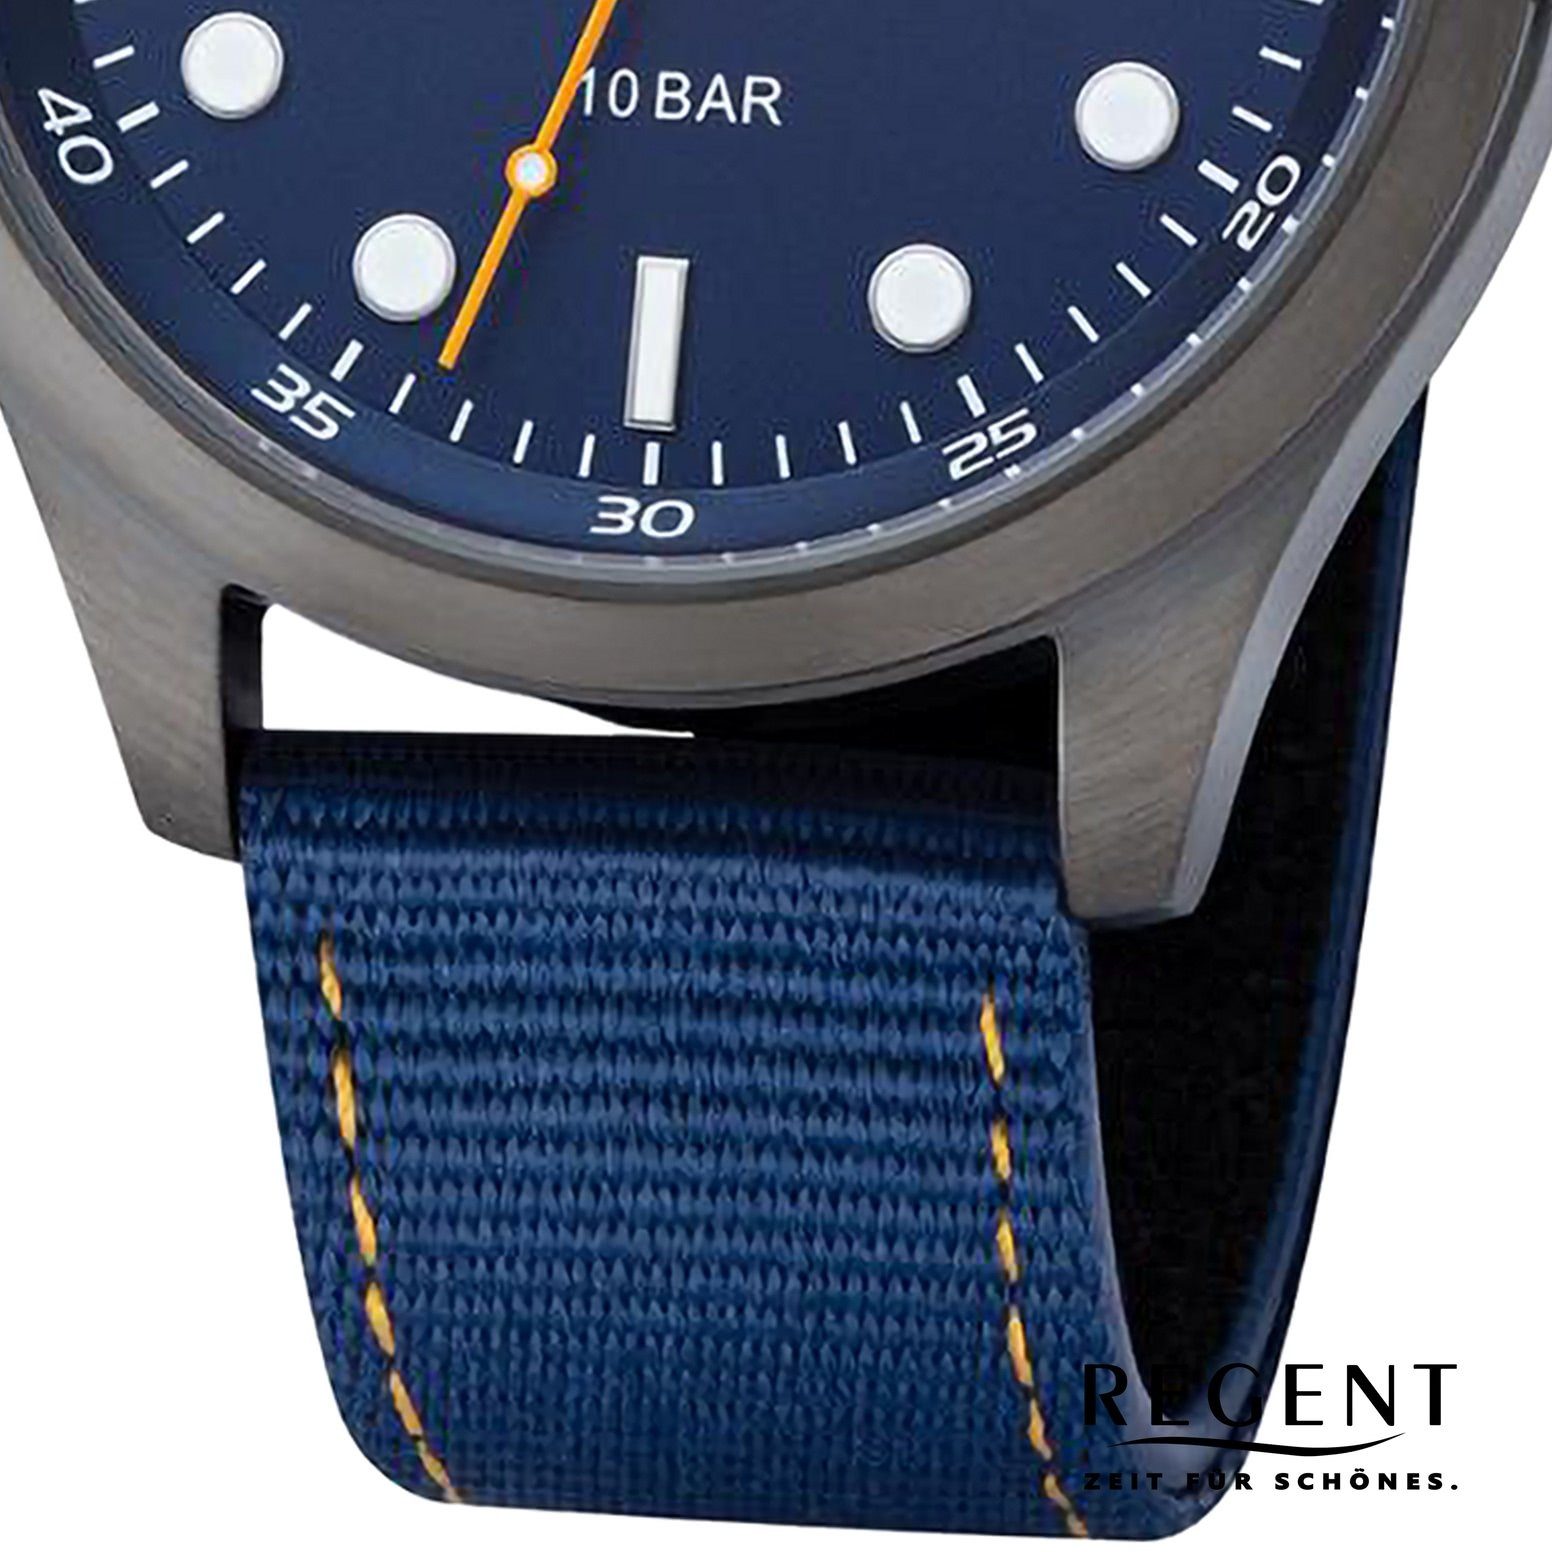 42mm), Herren Armbanduhr Herren Armbanduhr Analog, Textilarmband, Regent Quarzuhr Regent Uhrzeit extra rund, (ca. groß